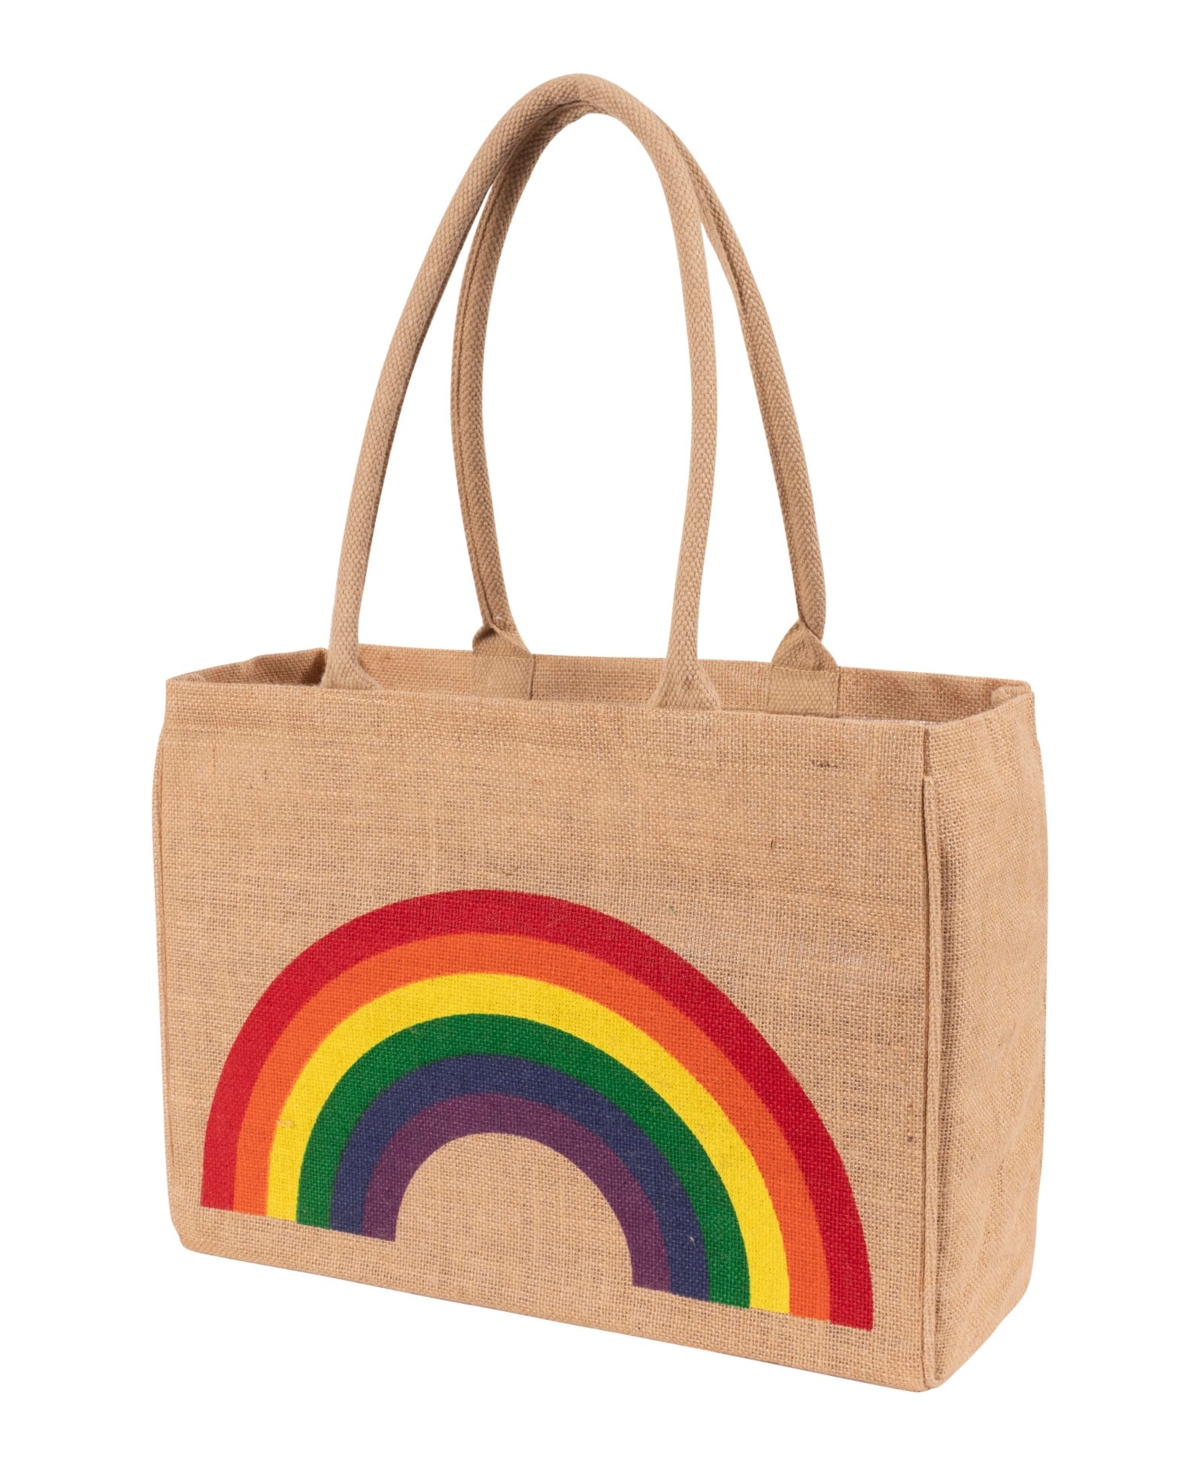 Kaf Home Jute Market Tote Bag With Rainbow Print In Beige